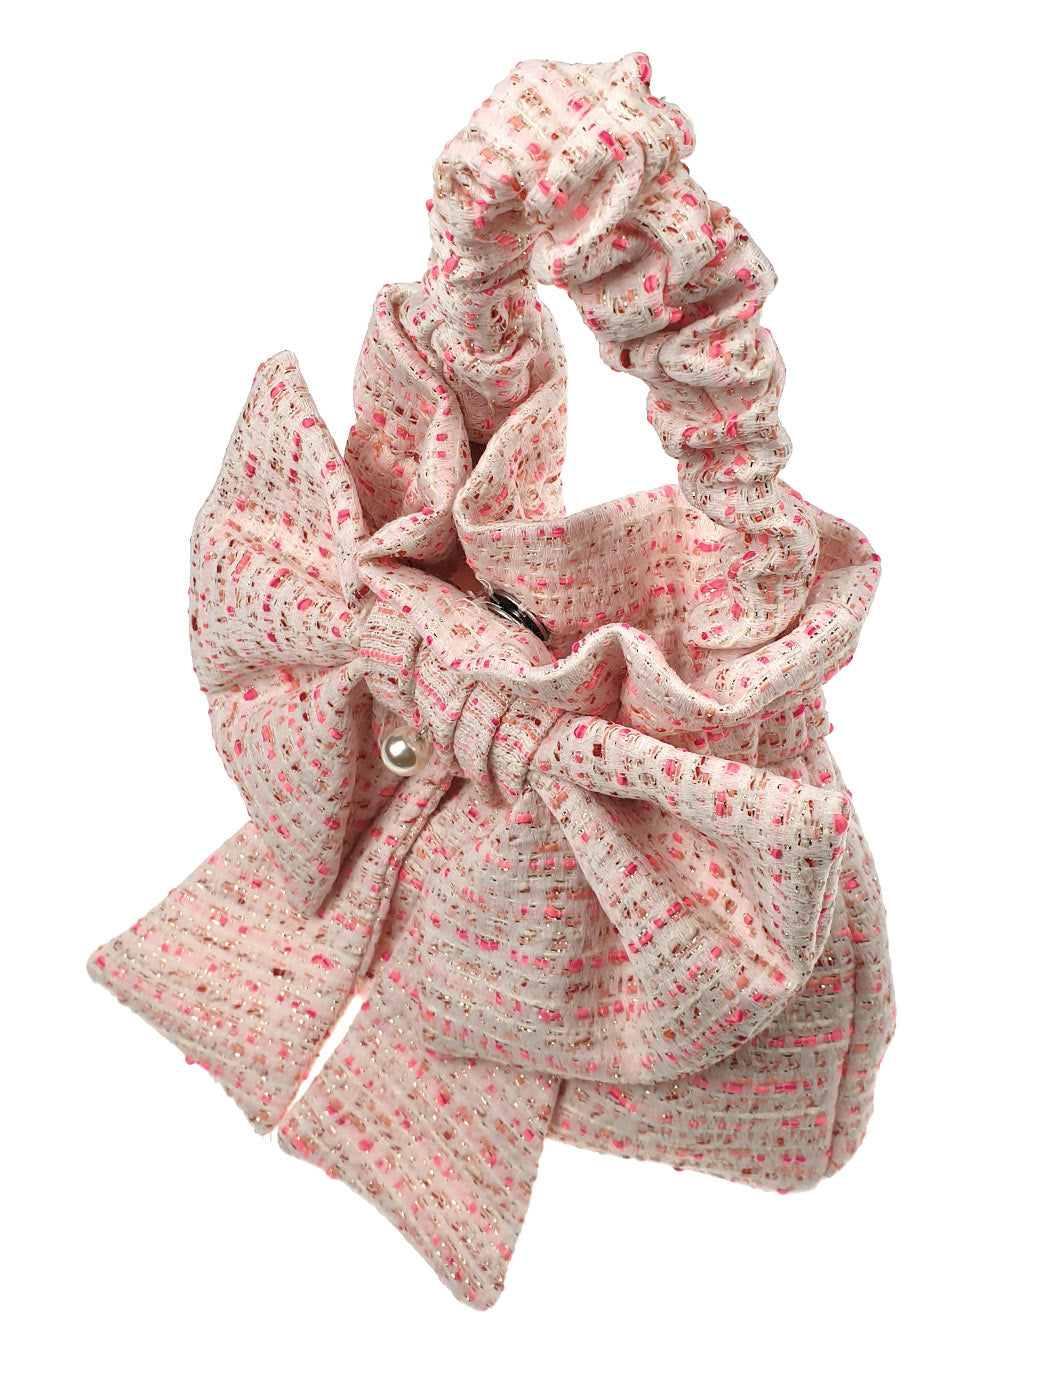 Girl's Pearl-embellished tweed mini bag-AUBREE Fuchsia